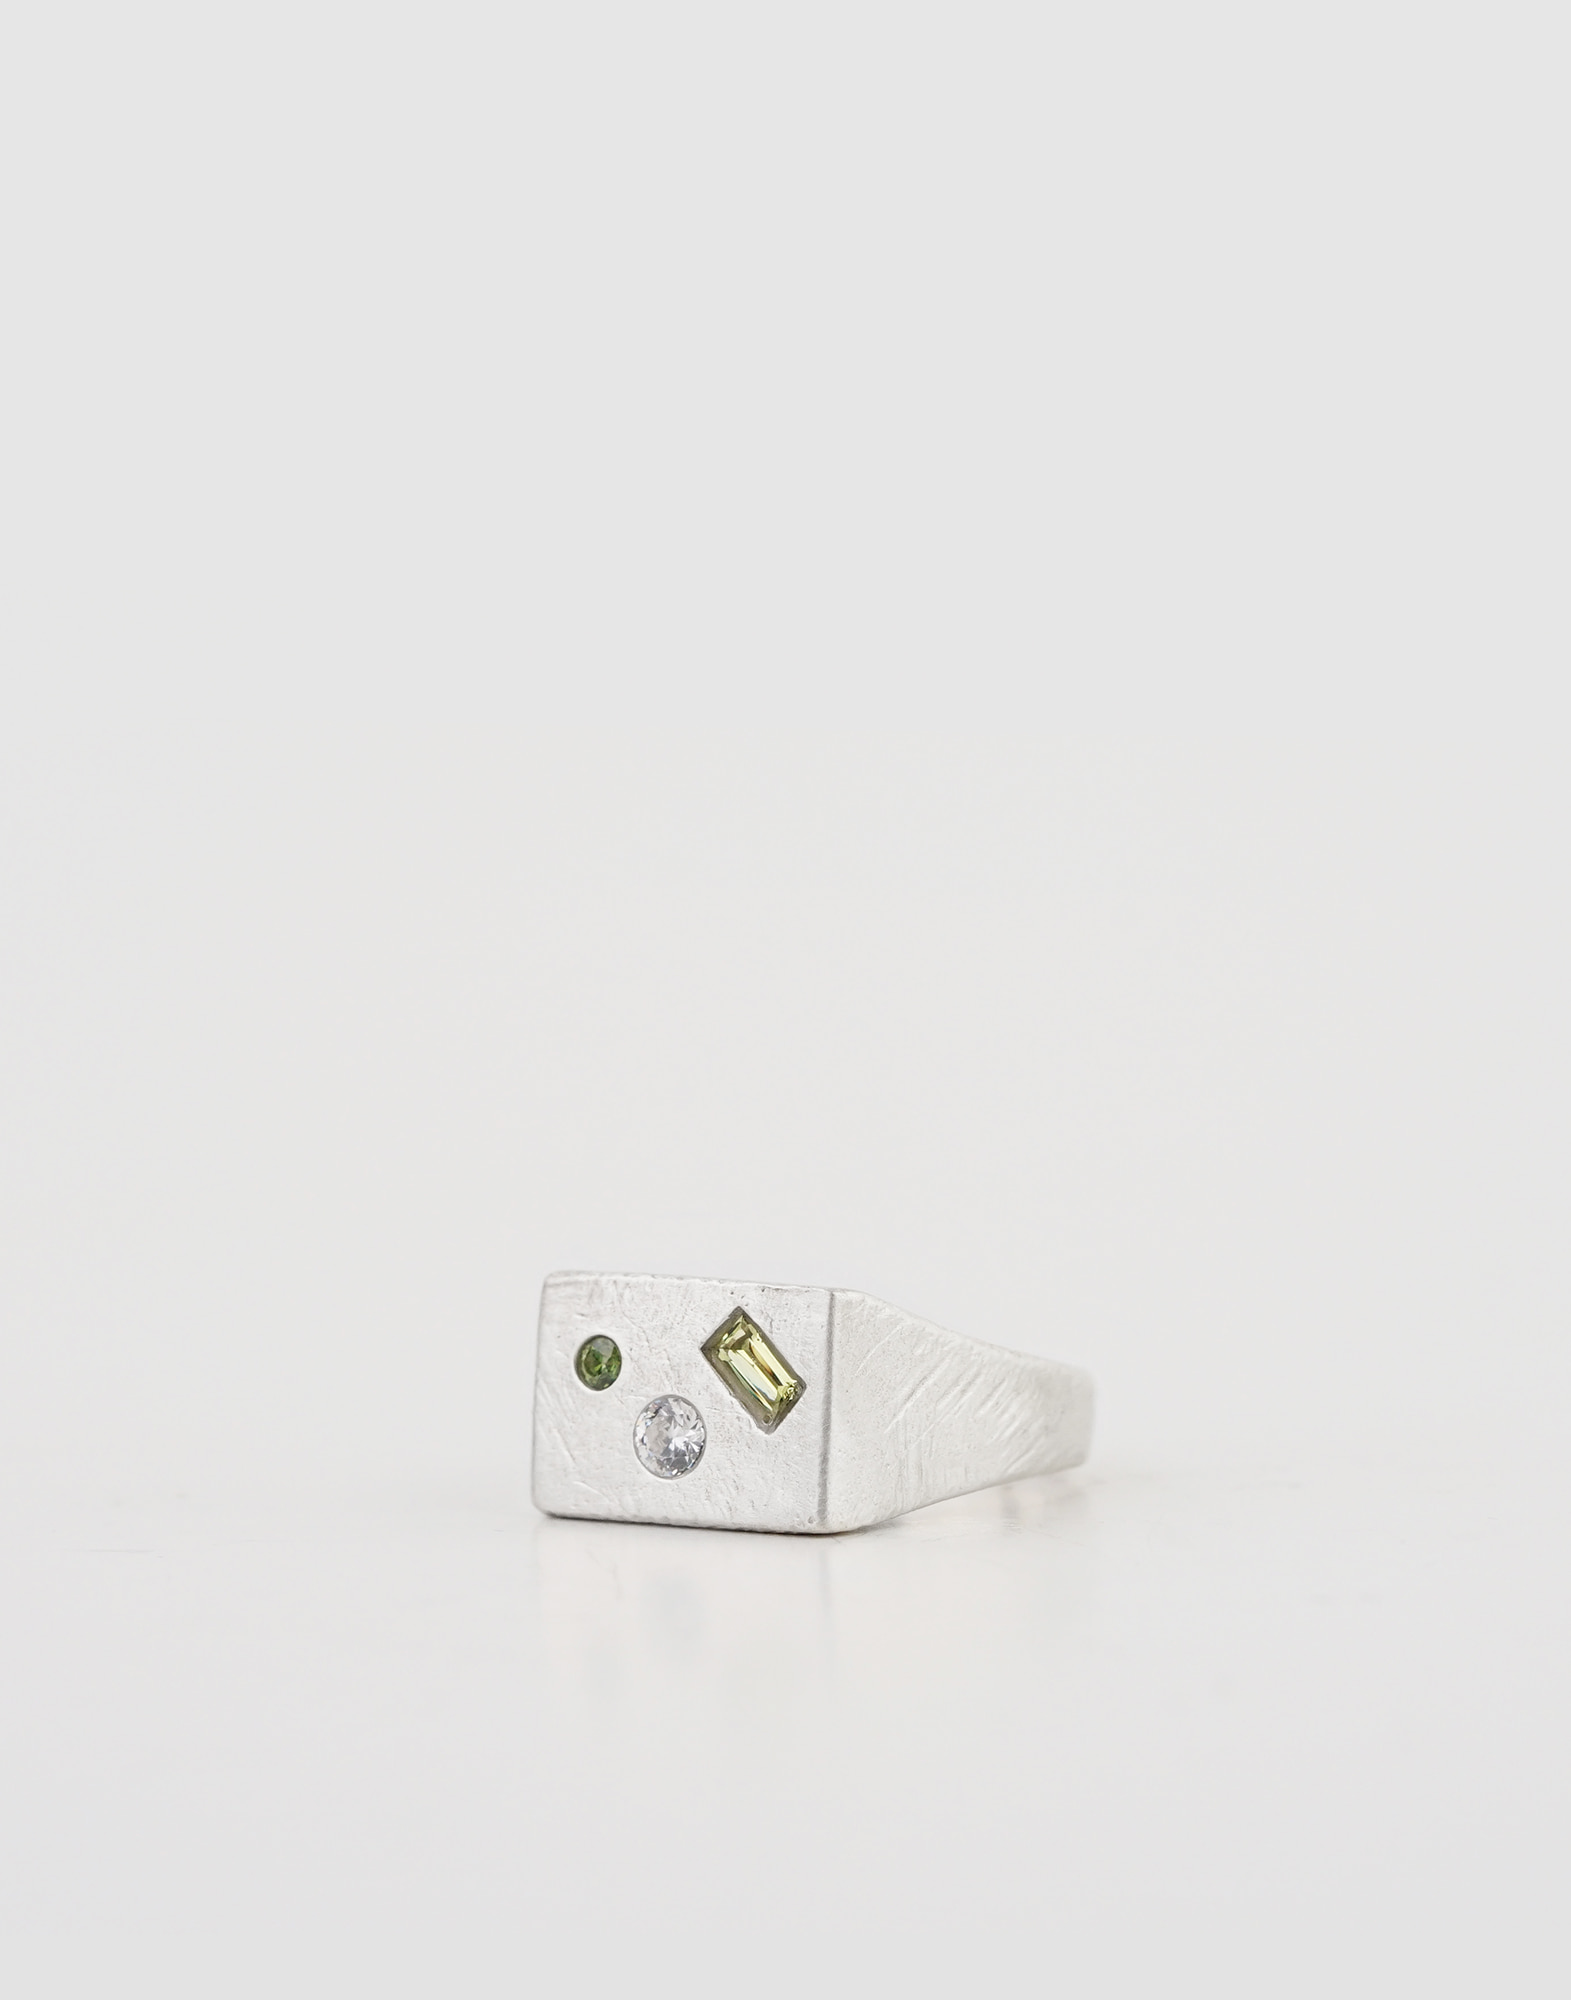 Signet ring (olive green crystal)